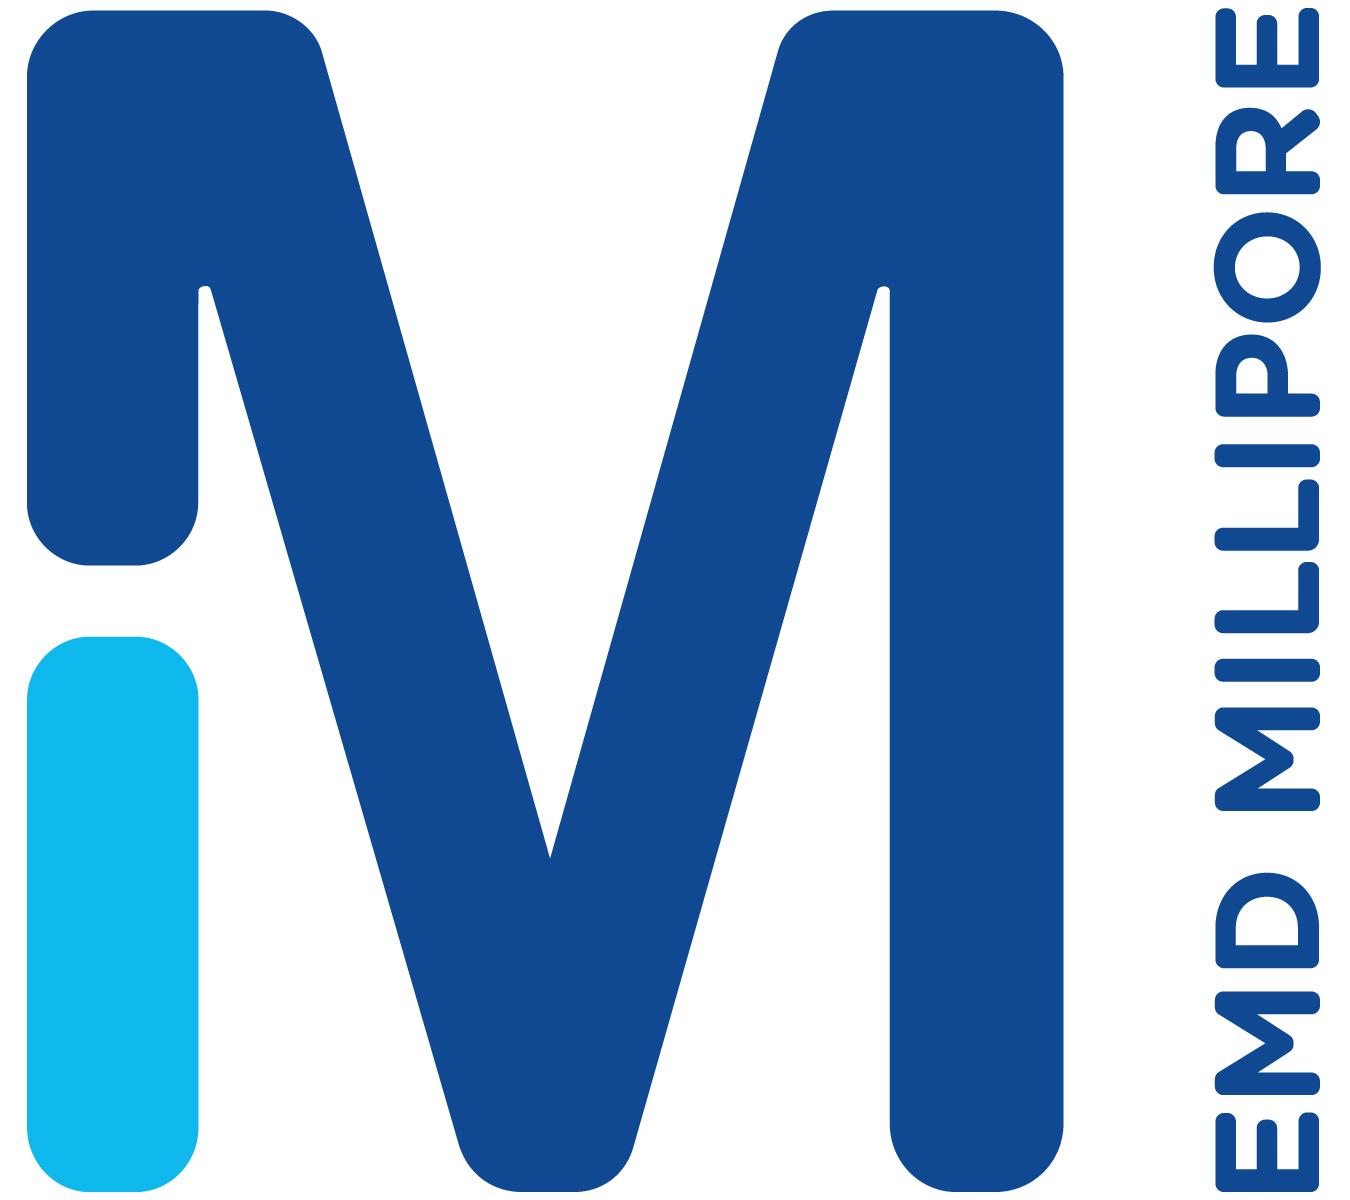 EMD Logo - EMD Millipore 4 Logos